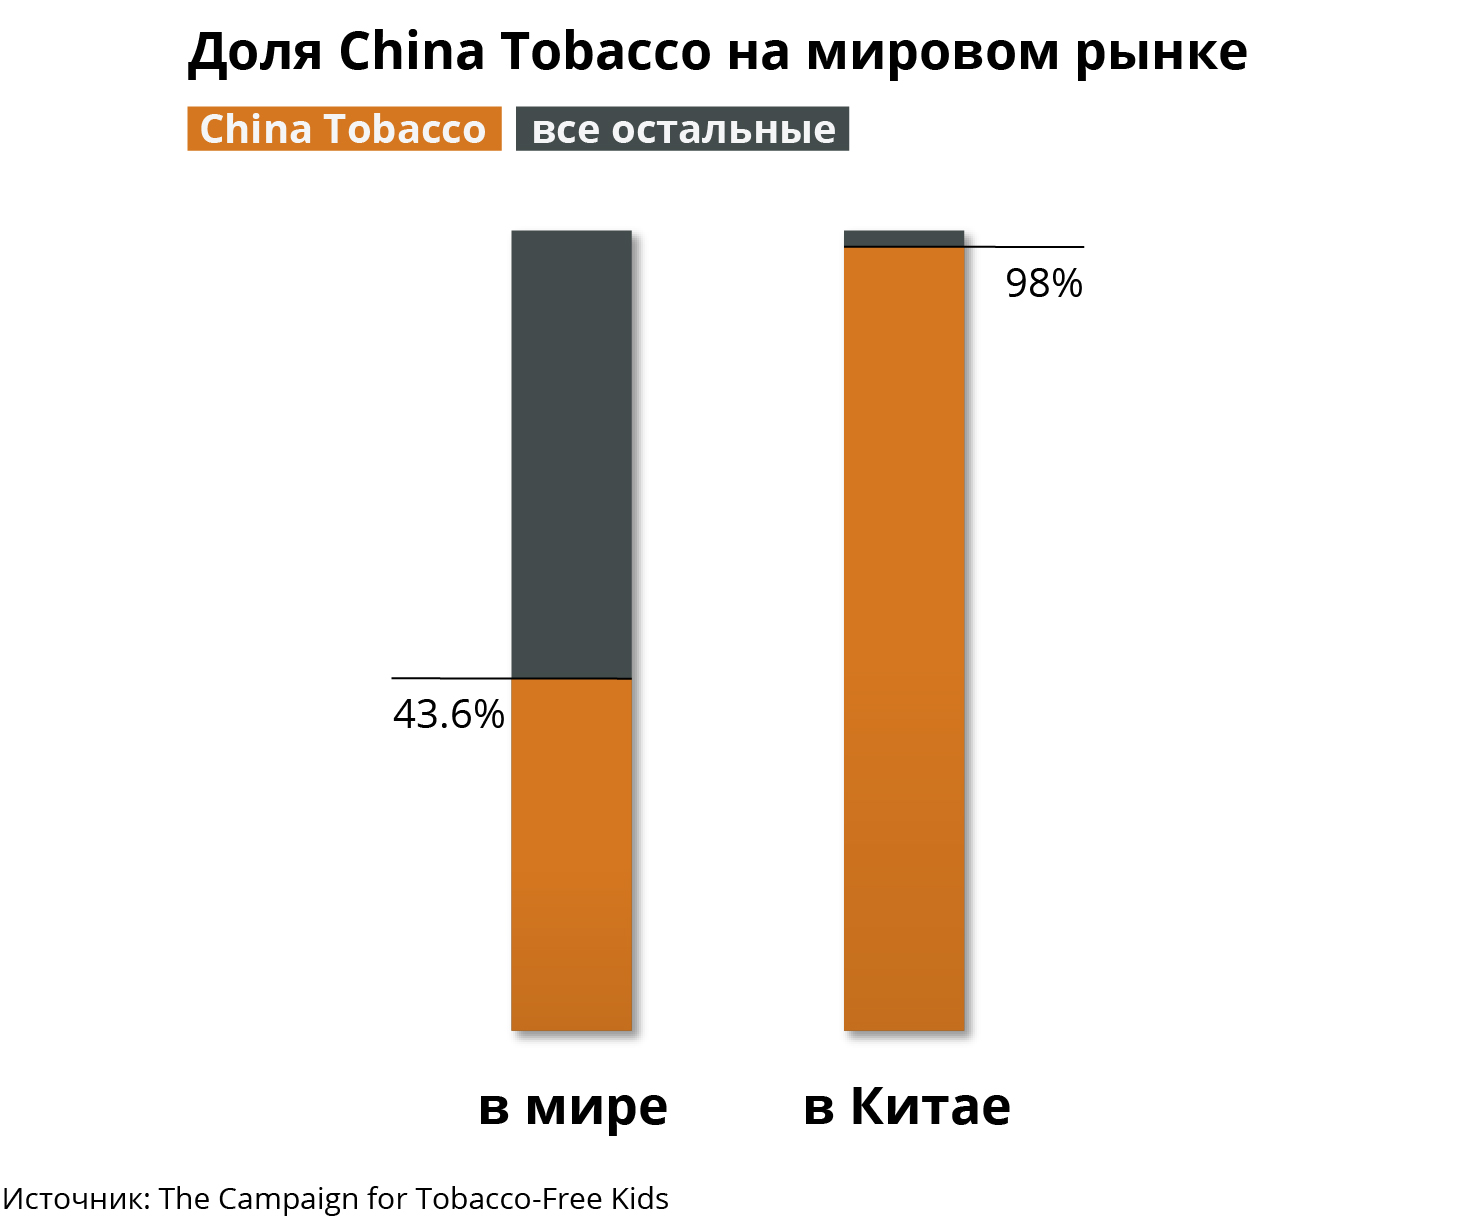 tobacco/china-tobacco/China-Tobacco-Marketshare-Desktop-RUS.jpg